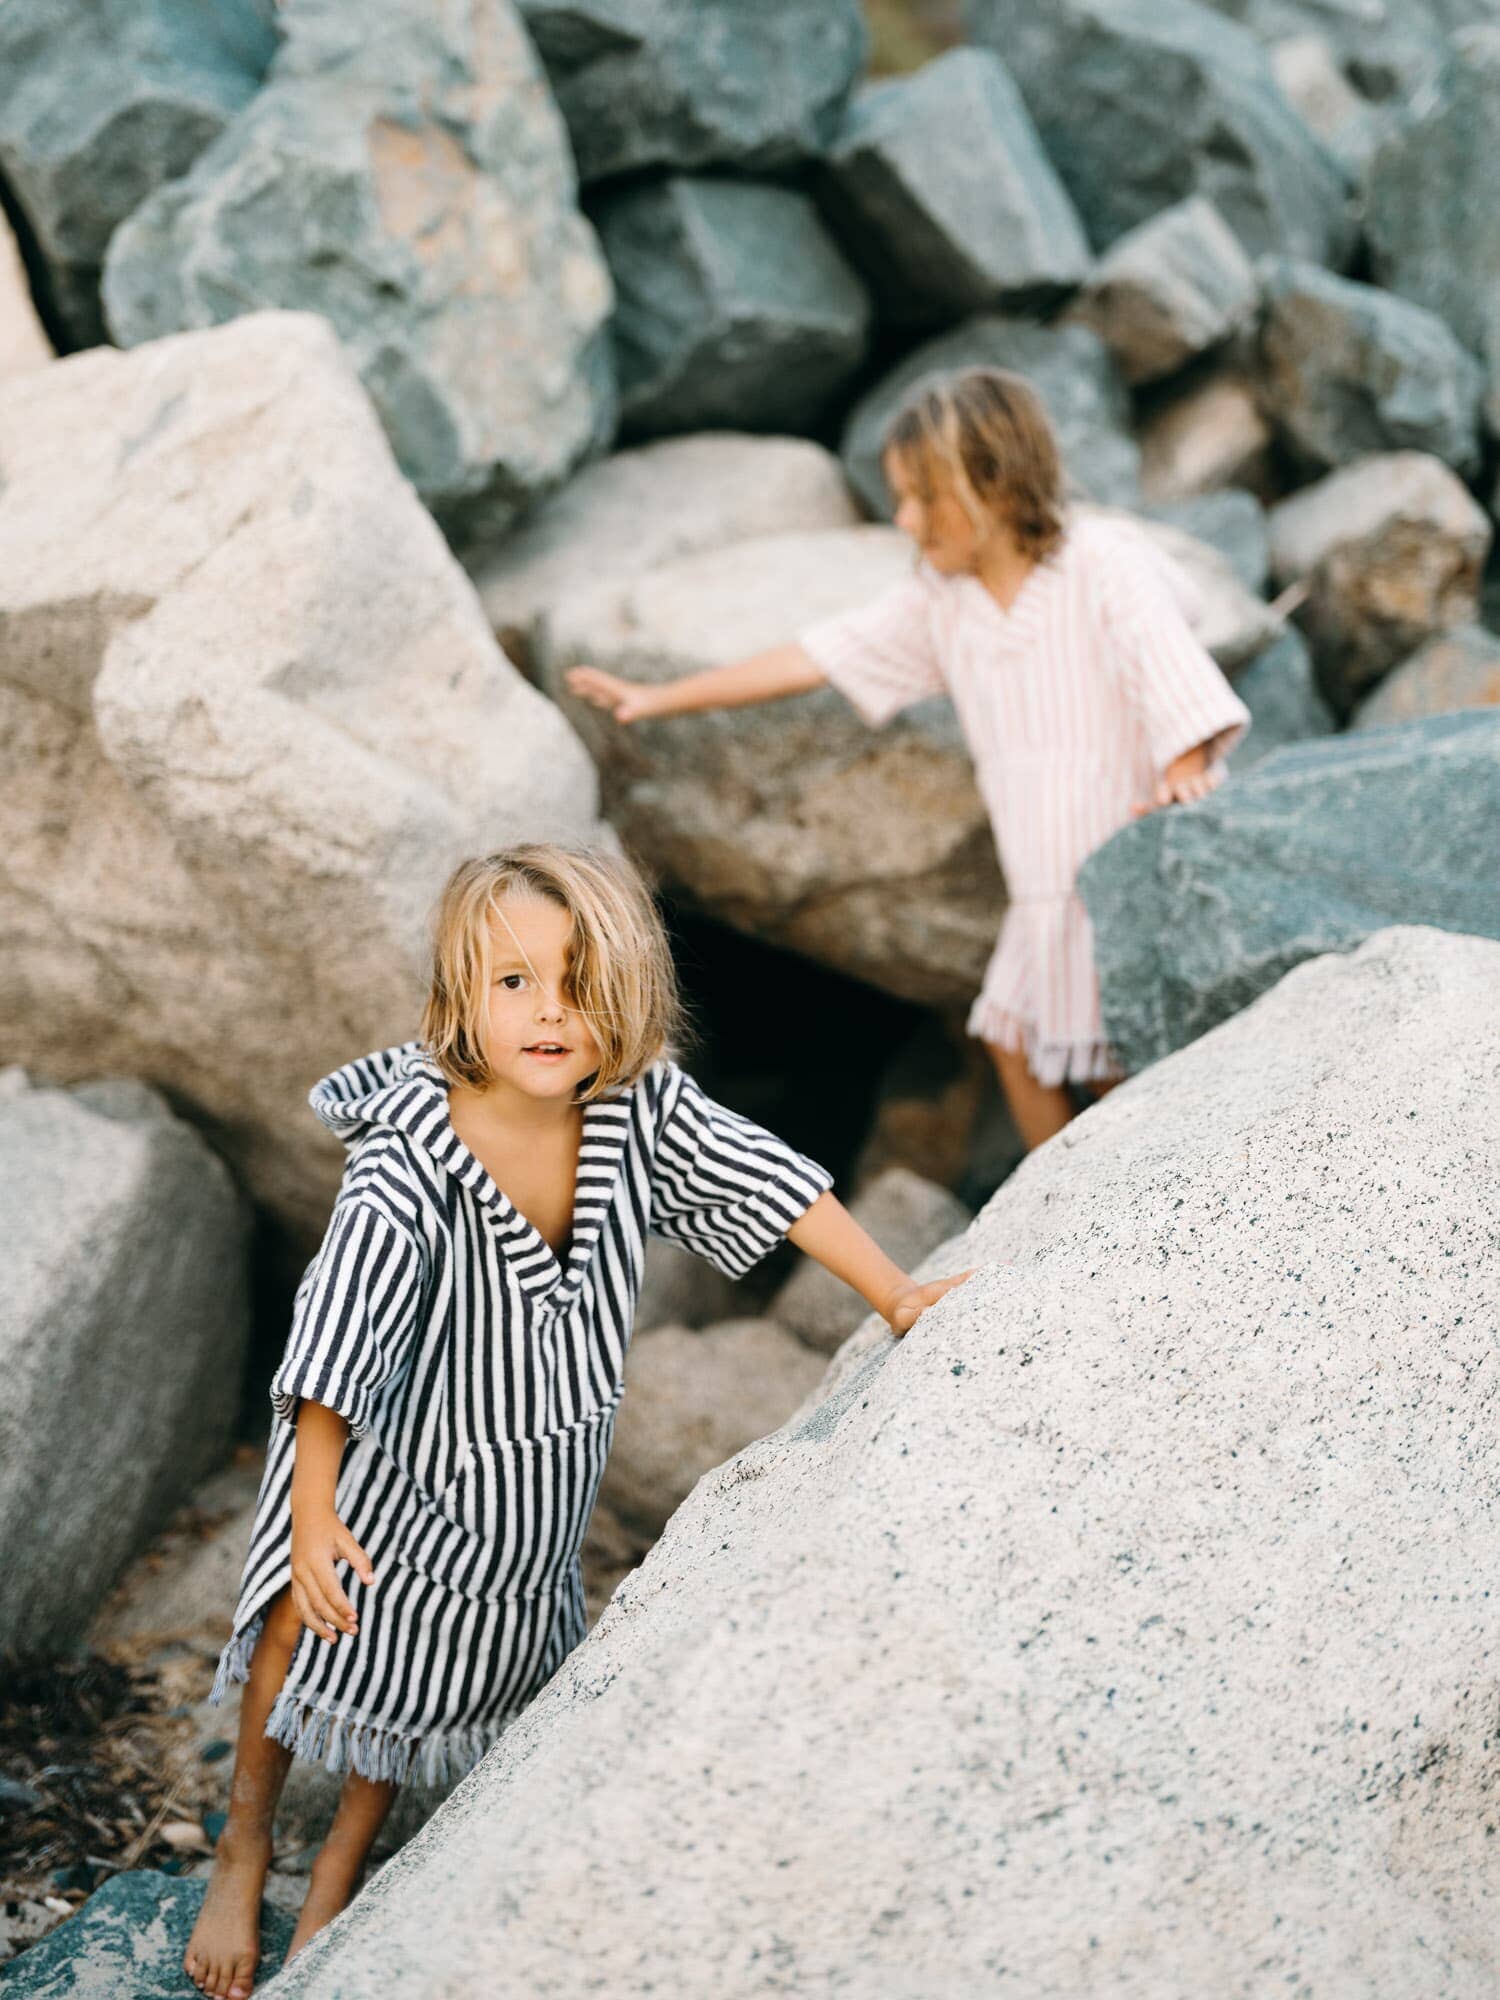 Children in ponchos playing on rocks